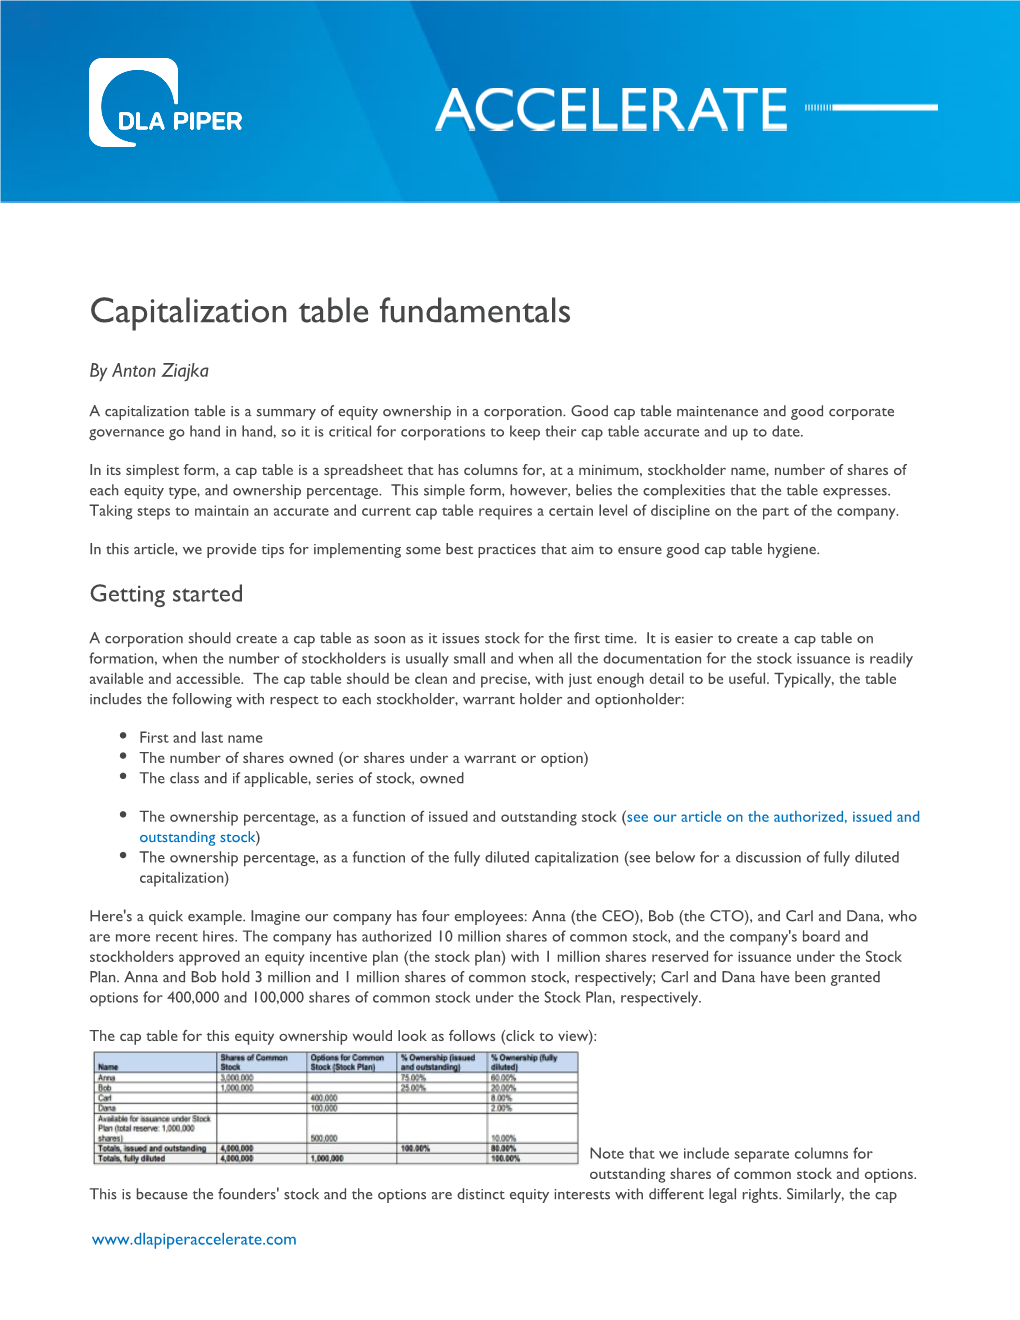 Capitalization Table Fundamentals